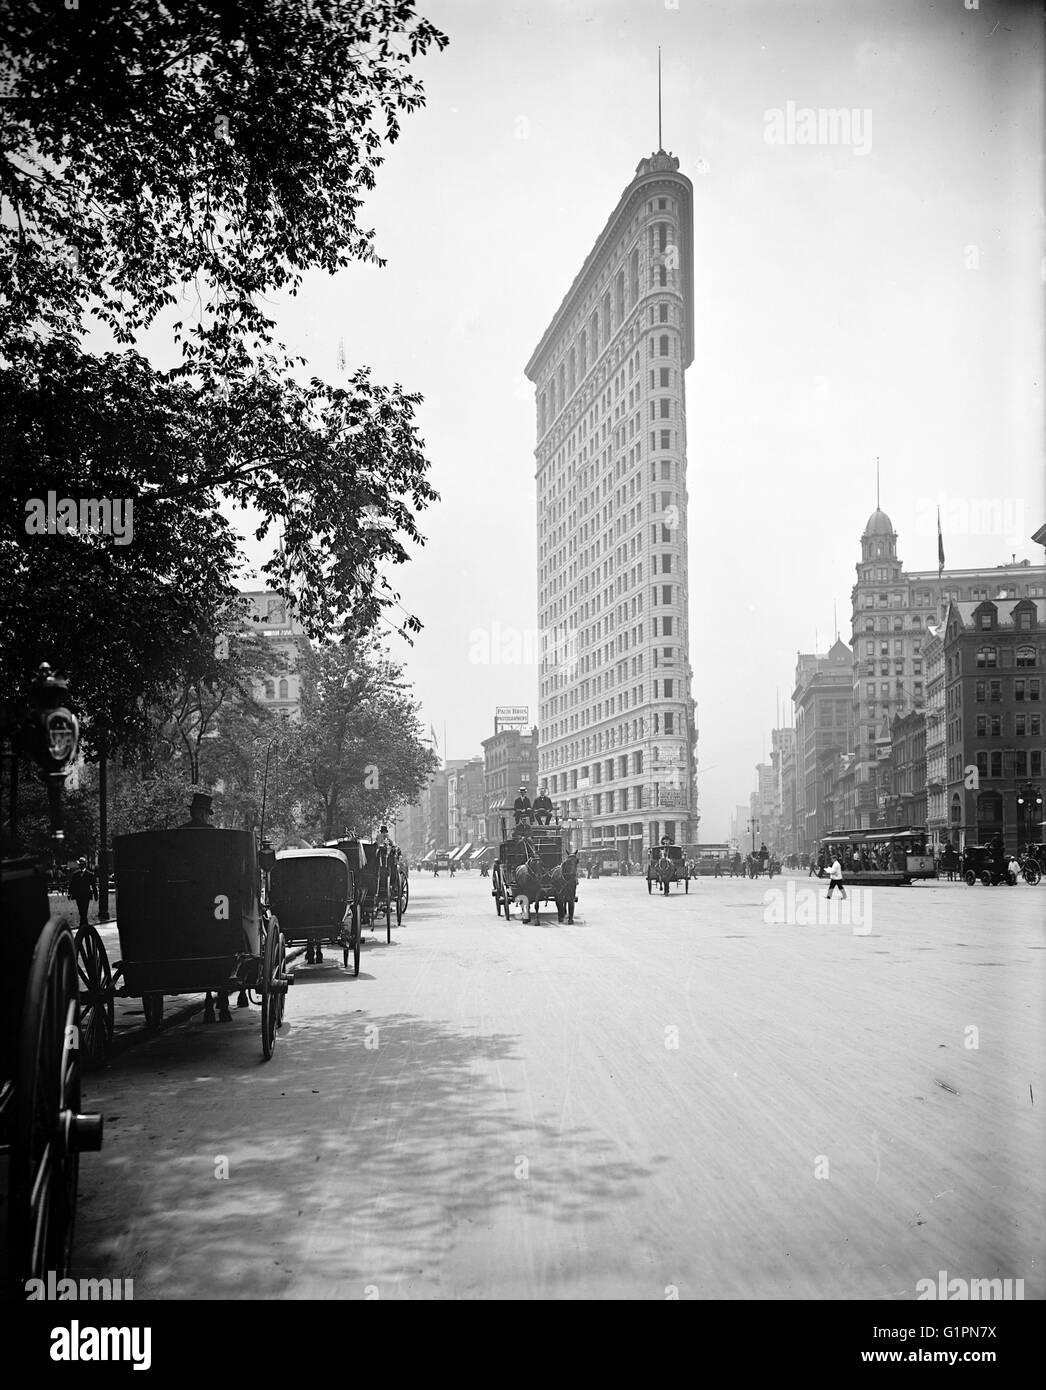 NYC: FLATIRON BUILDING, c1902.  The Flatiron Building in New York City. Photograph, c1902. Stock Photo